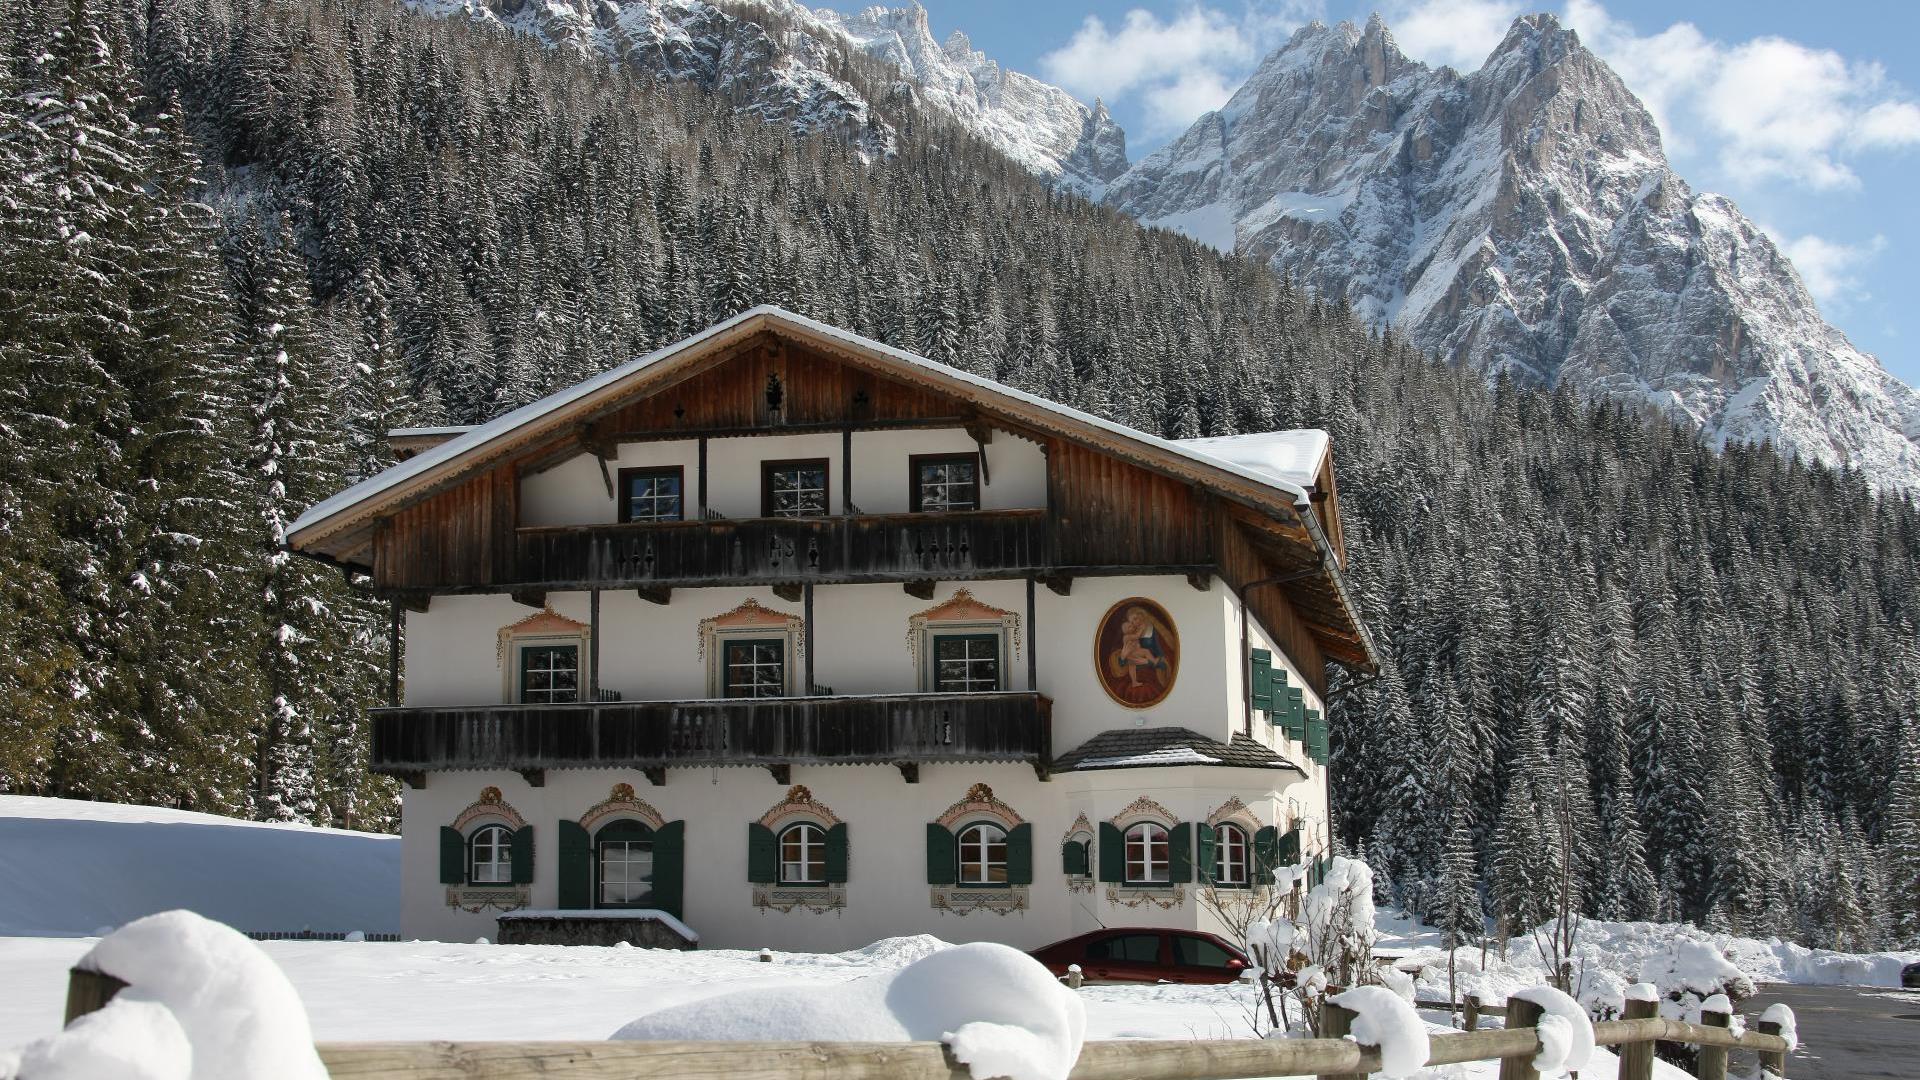 The annexe Alte Post in winter